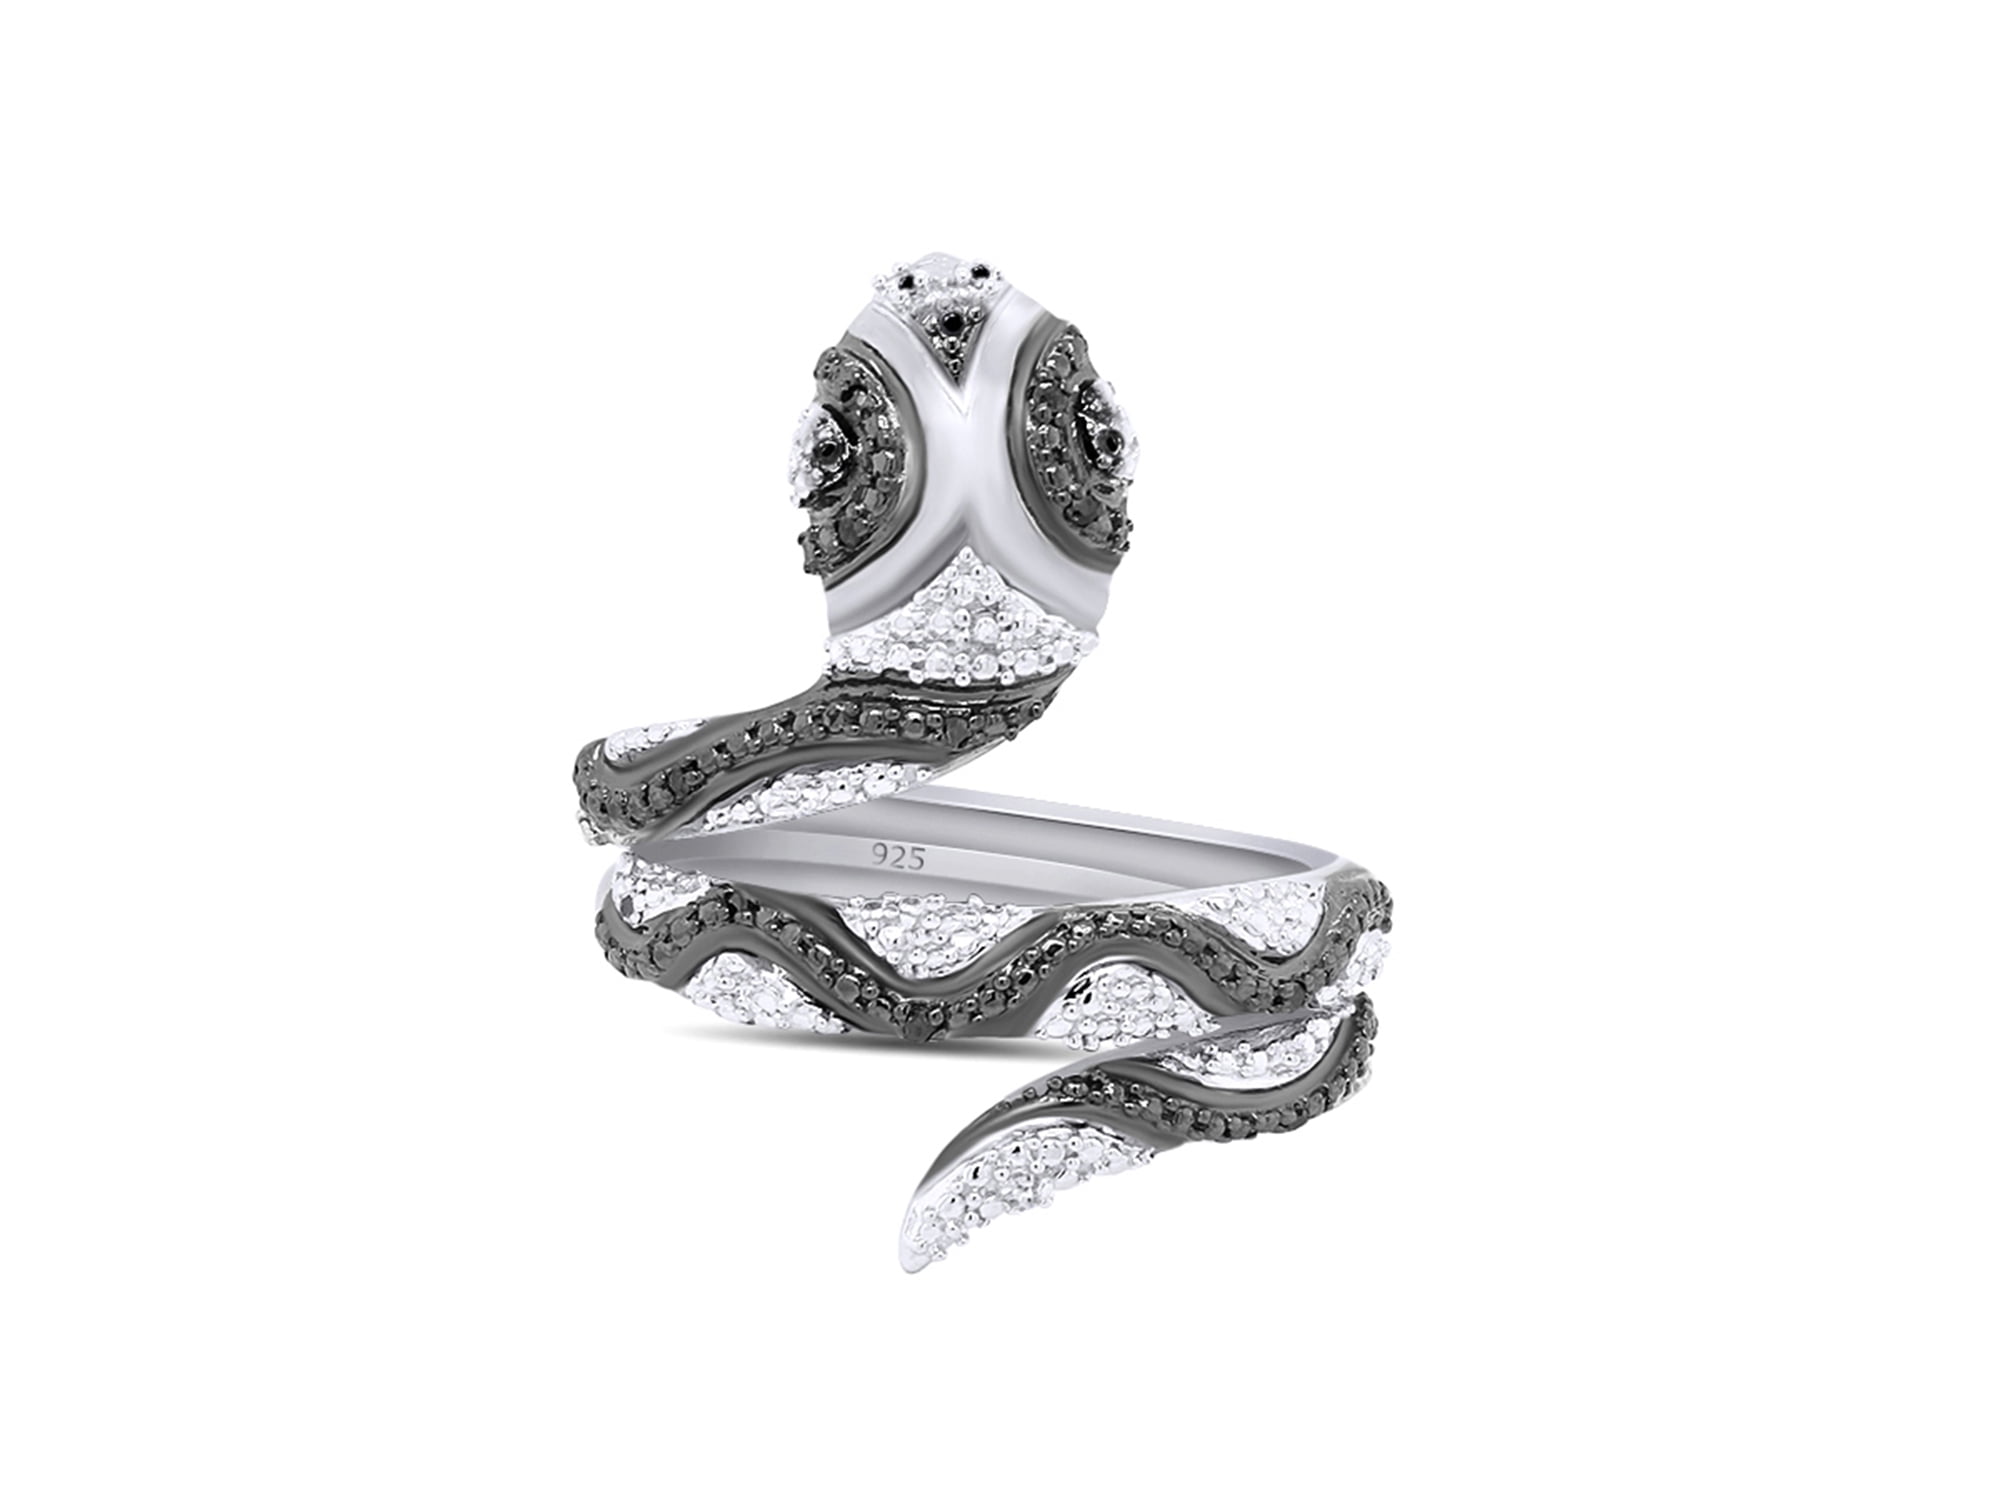 Men Women Stainless Steel Snake Python Ring Party Gift Black Gold Size 6-13  | eBay